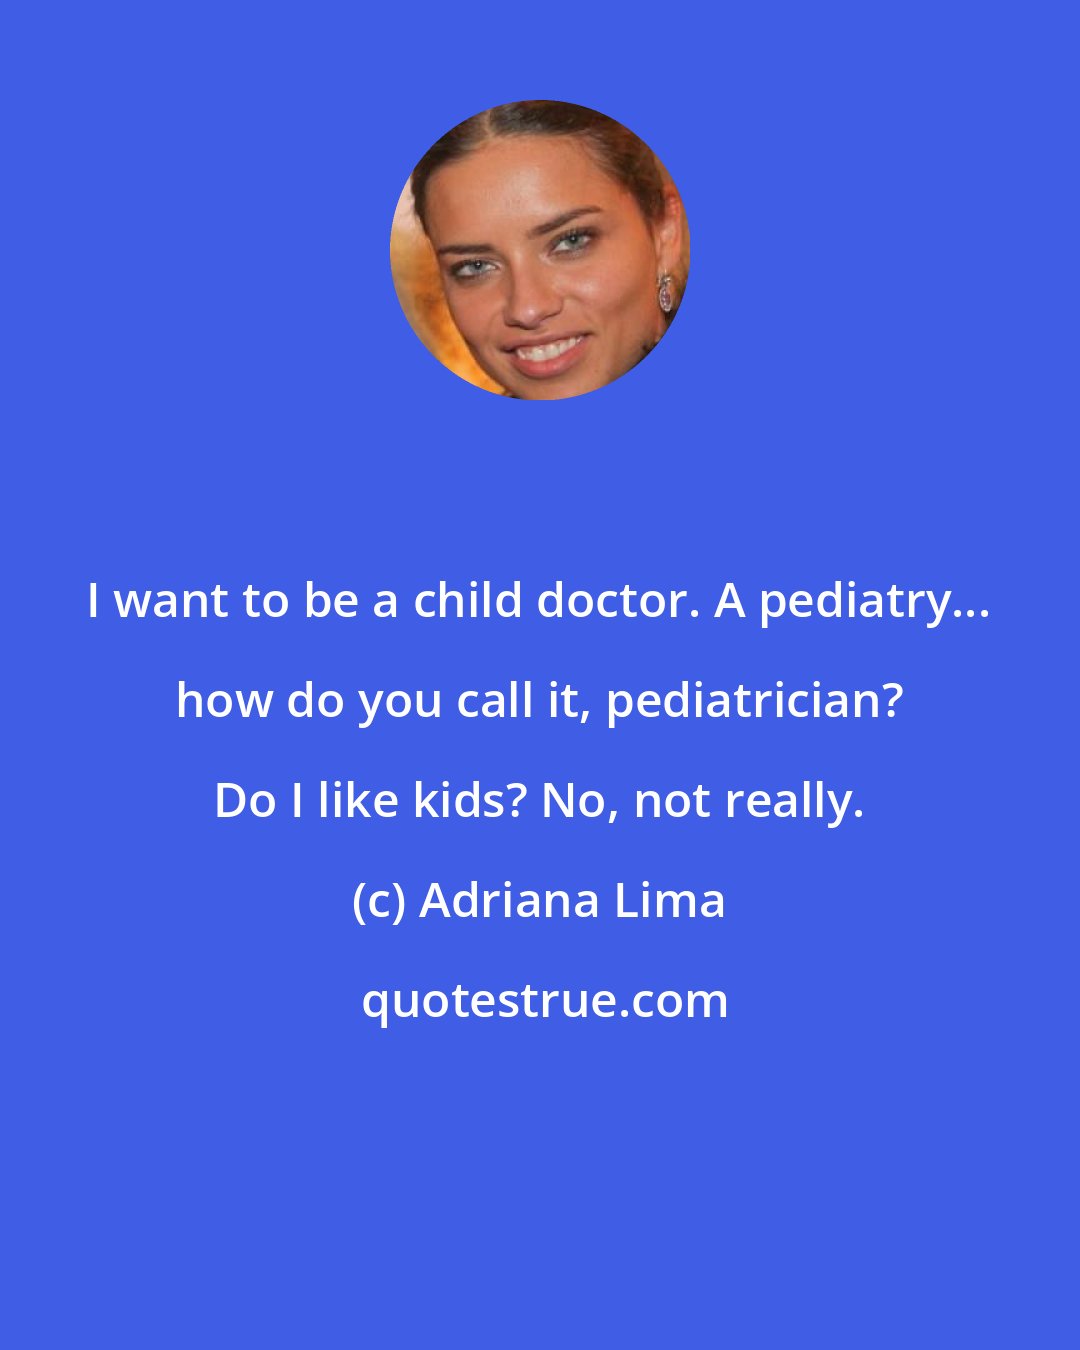 Adriana Lima: I want to be a child doctor. A pediatry... how do you call it, pediatrician? Do I like kids? No, not really.